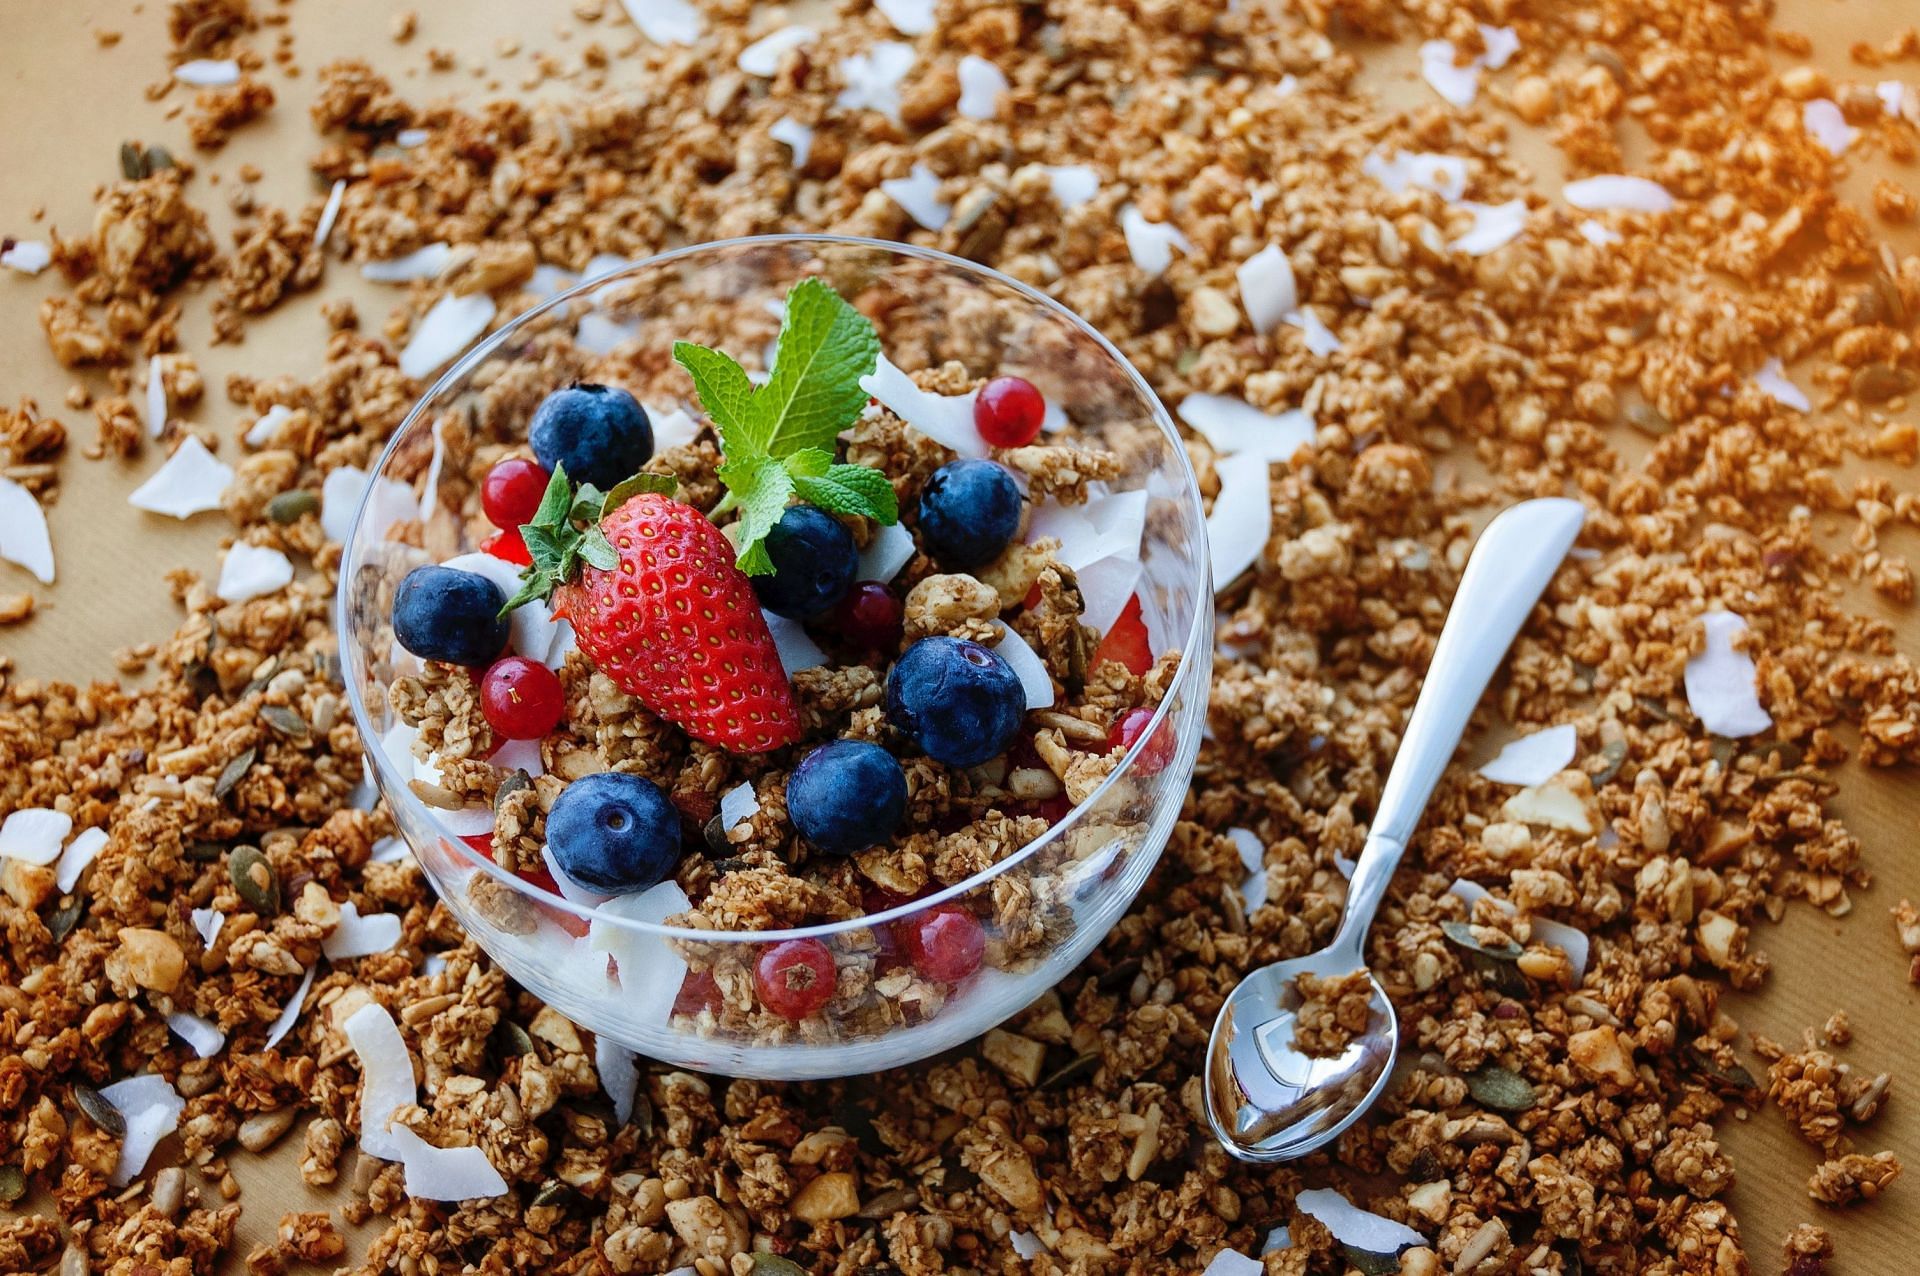 Yogurt for fresh breath (image sourced via Pexels / Photo by Ovidiu)